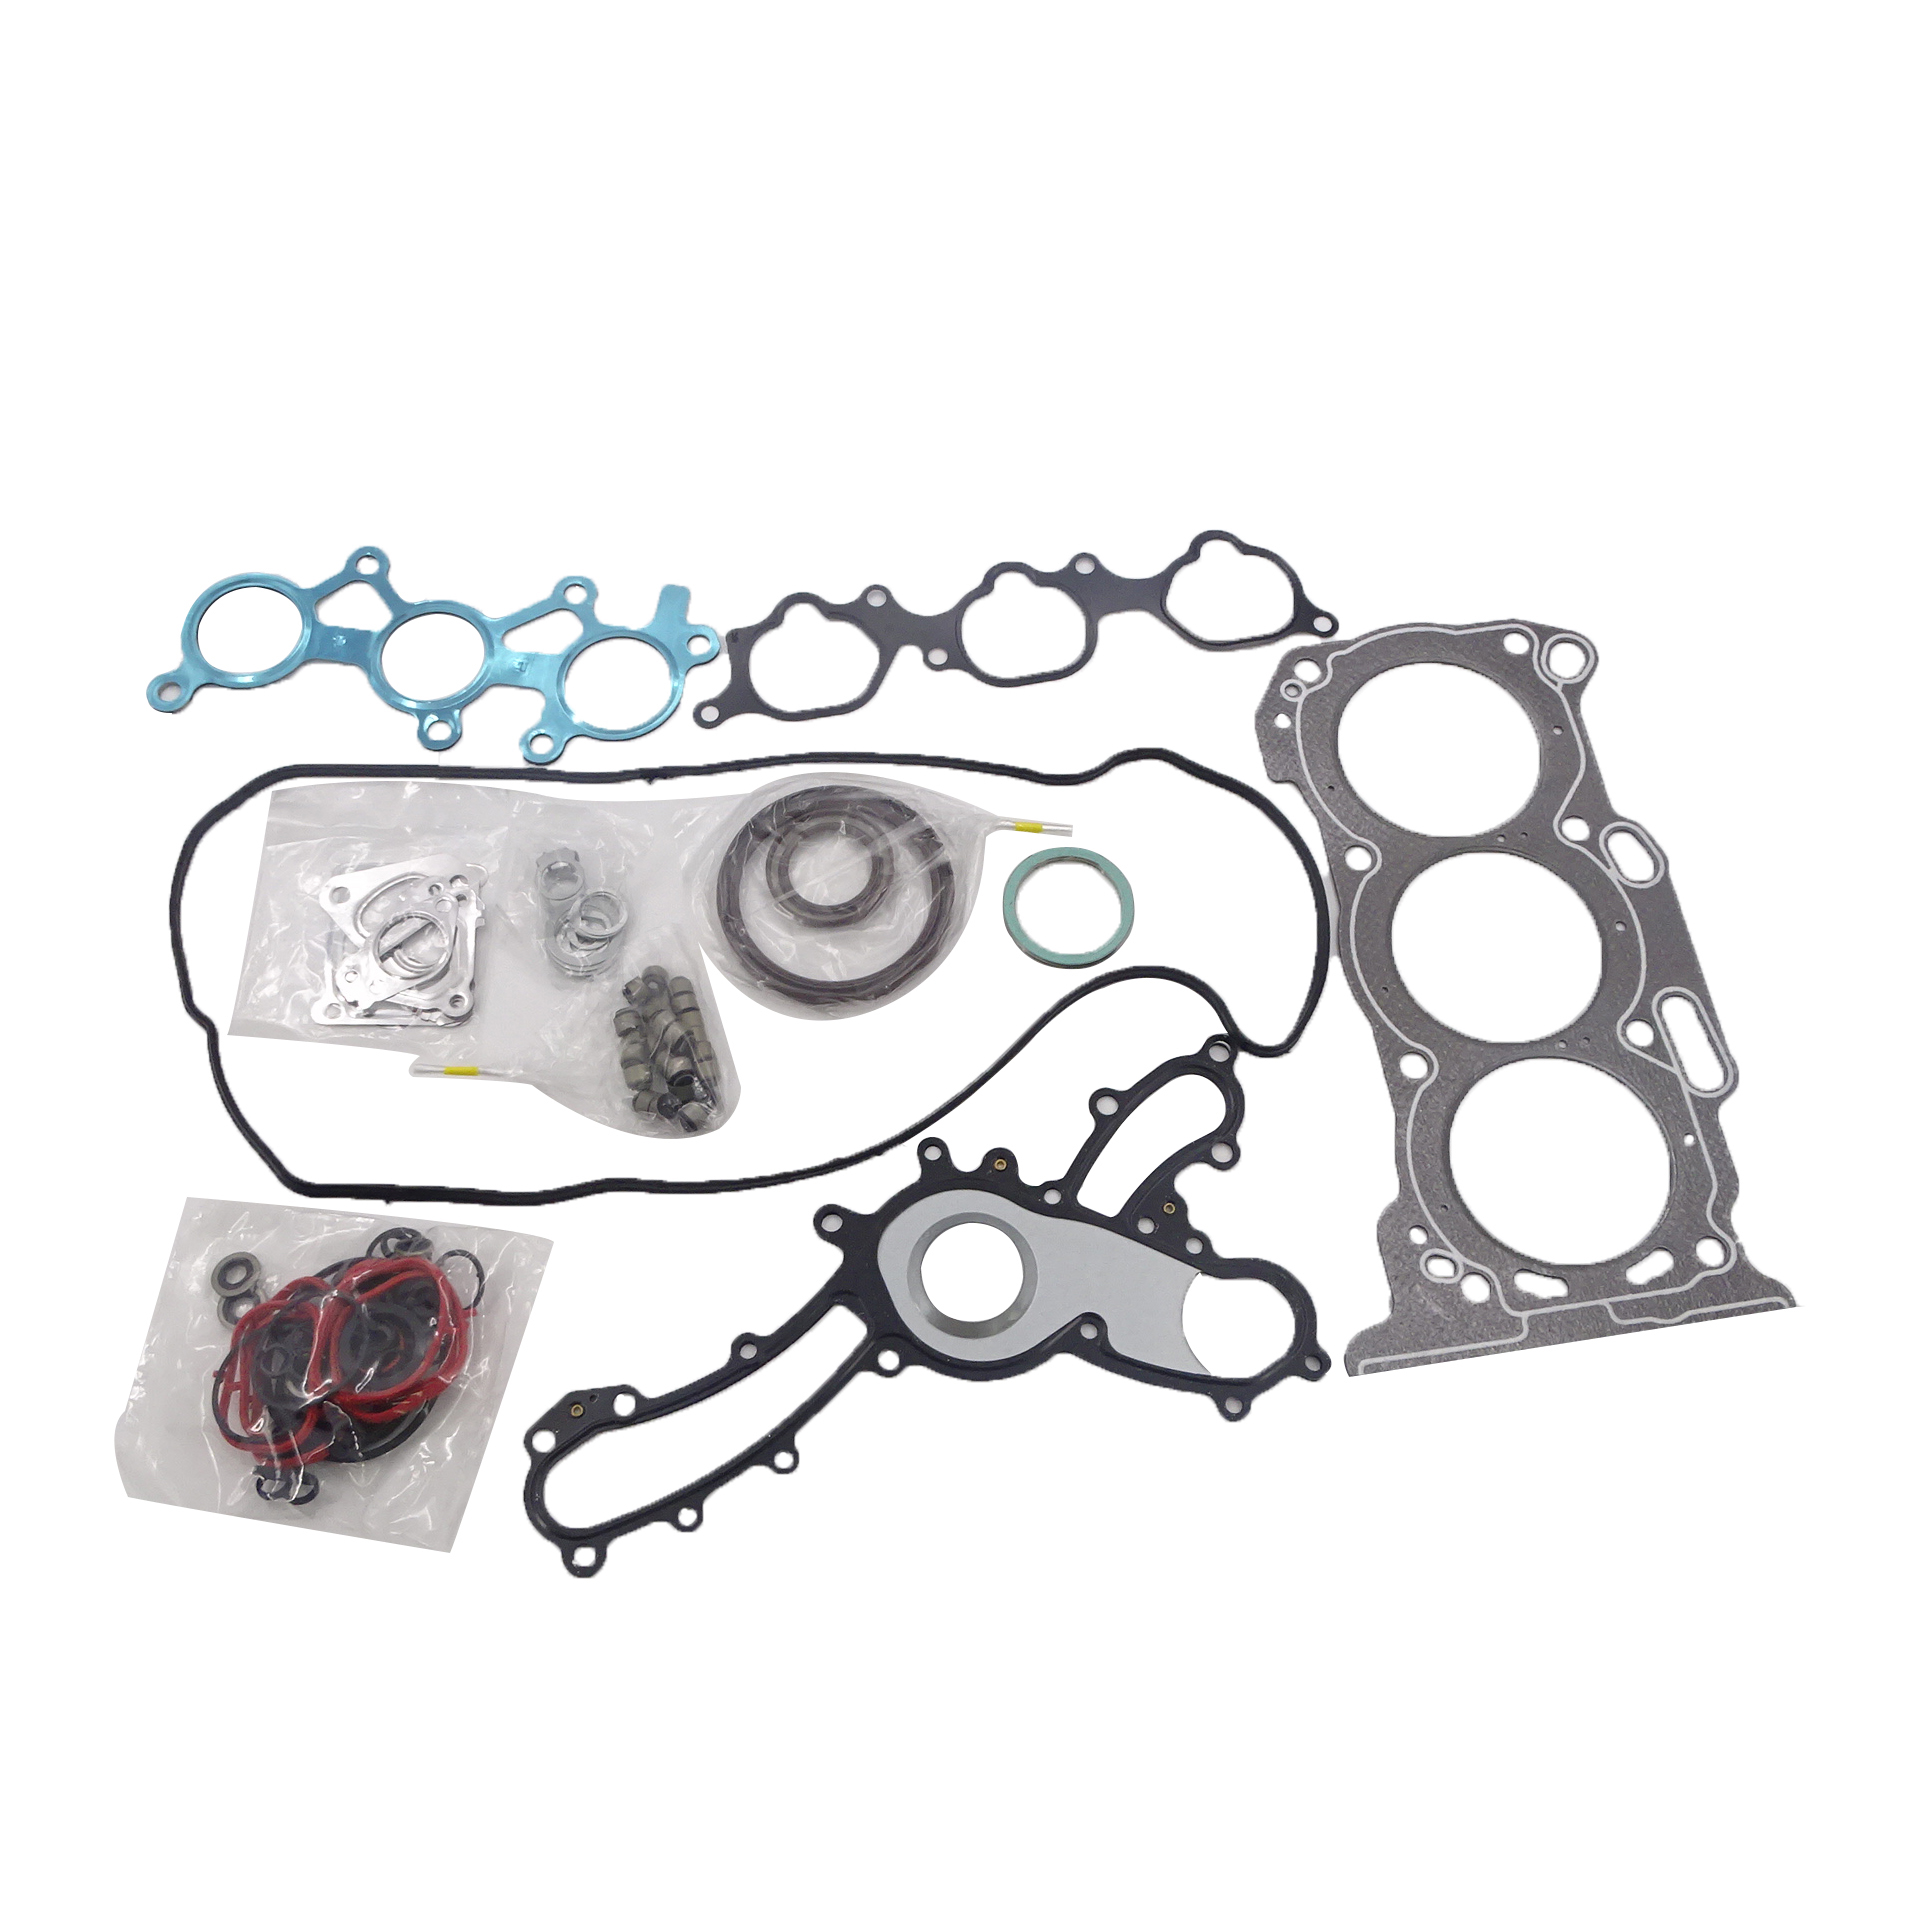 Head Gasket Kit for Toyota Highlander 3.5L(GSU45) 2009-2012 OE:04111-31442